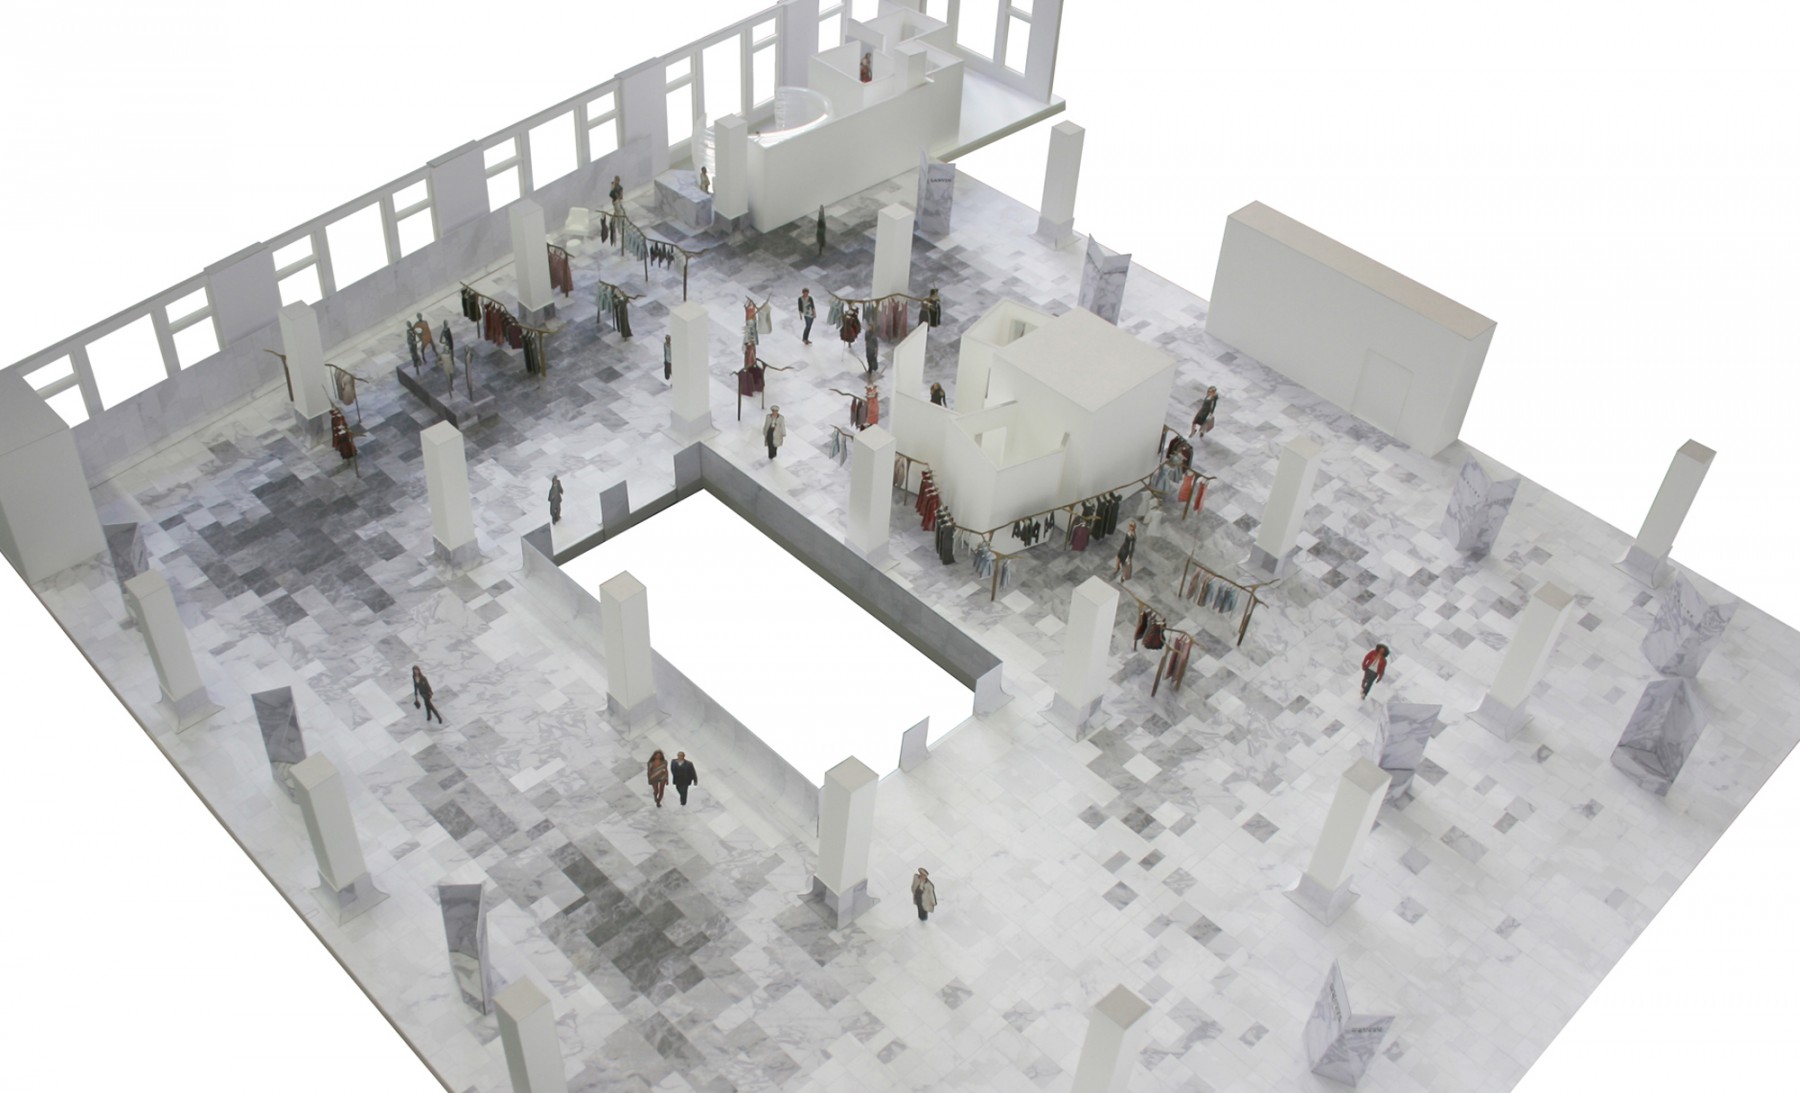 Selfridges-London-designer-fashion-retail-Jamie-Fobert-Architects-shop-model-2